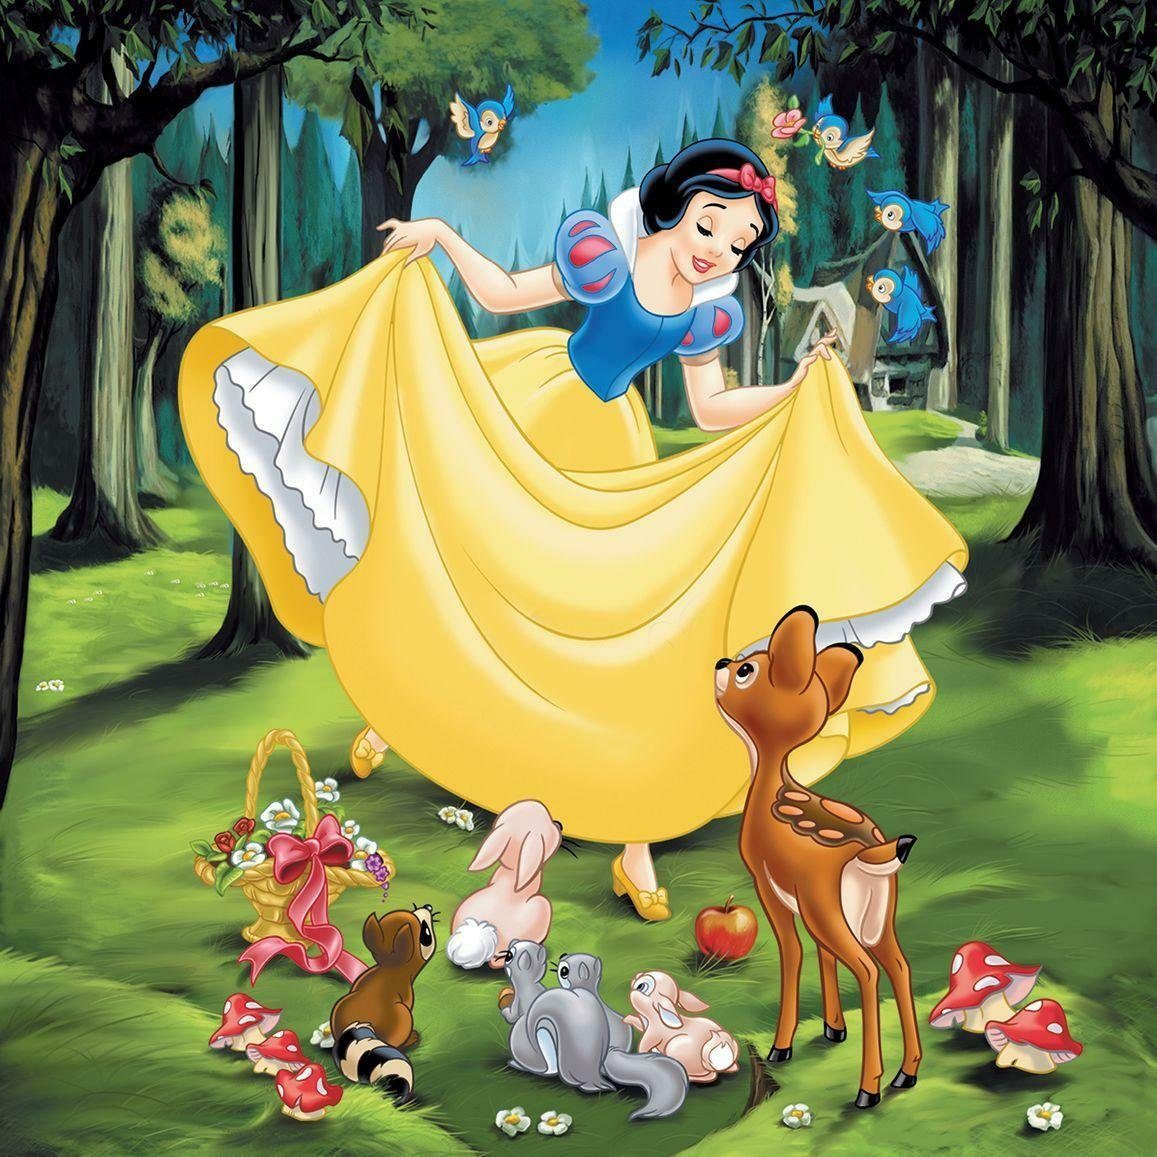 Ravensburger Aschenputtel, 49 Disney Puzzleteile Arielle. Puzzle x..., Princess: Schneewittchen, Puzzle 3